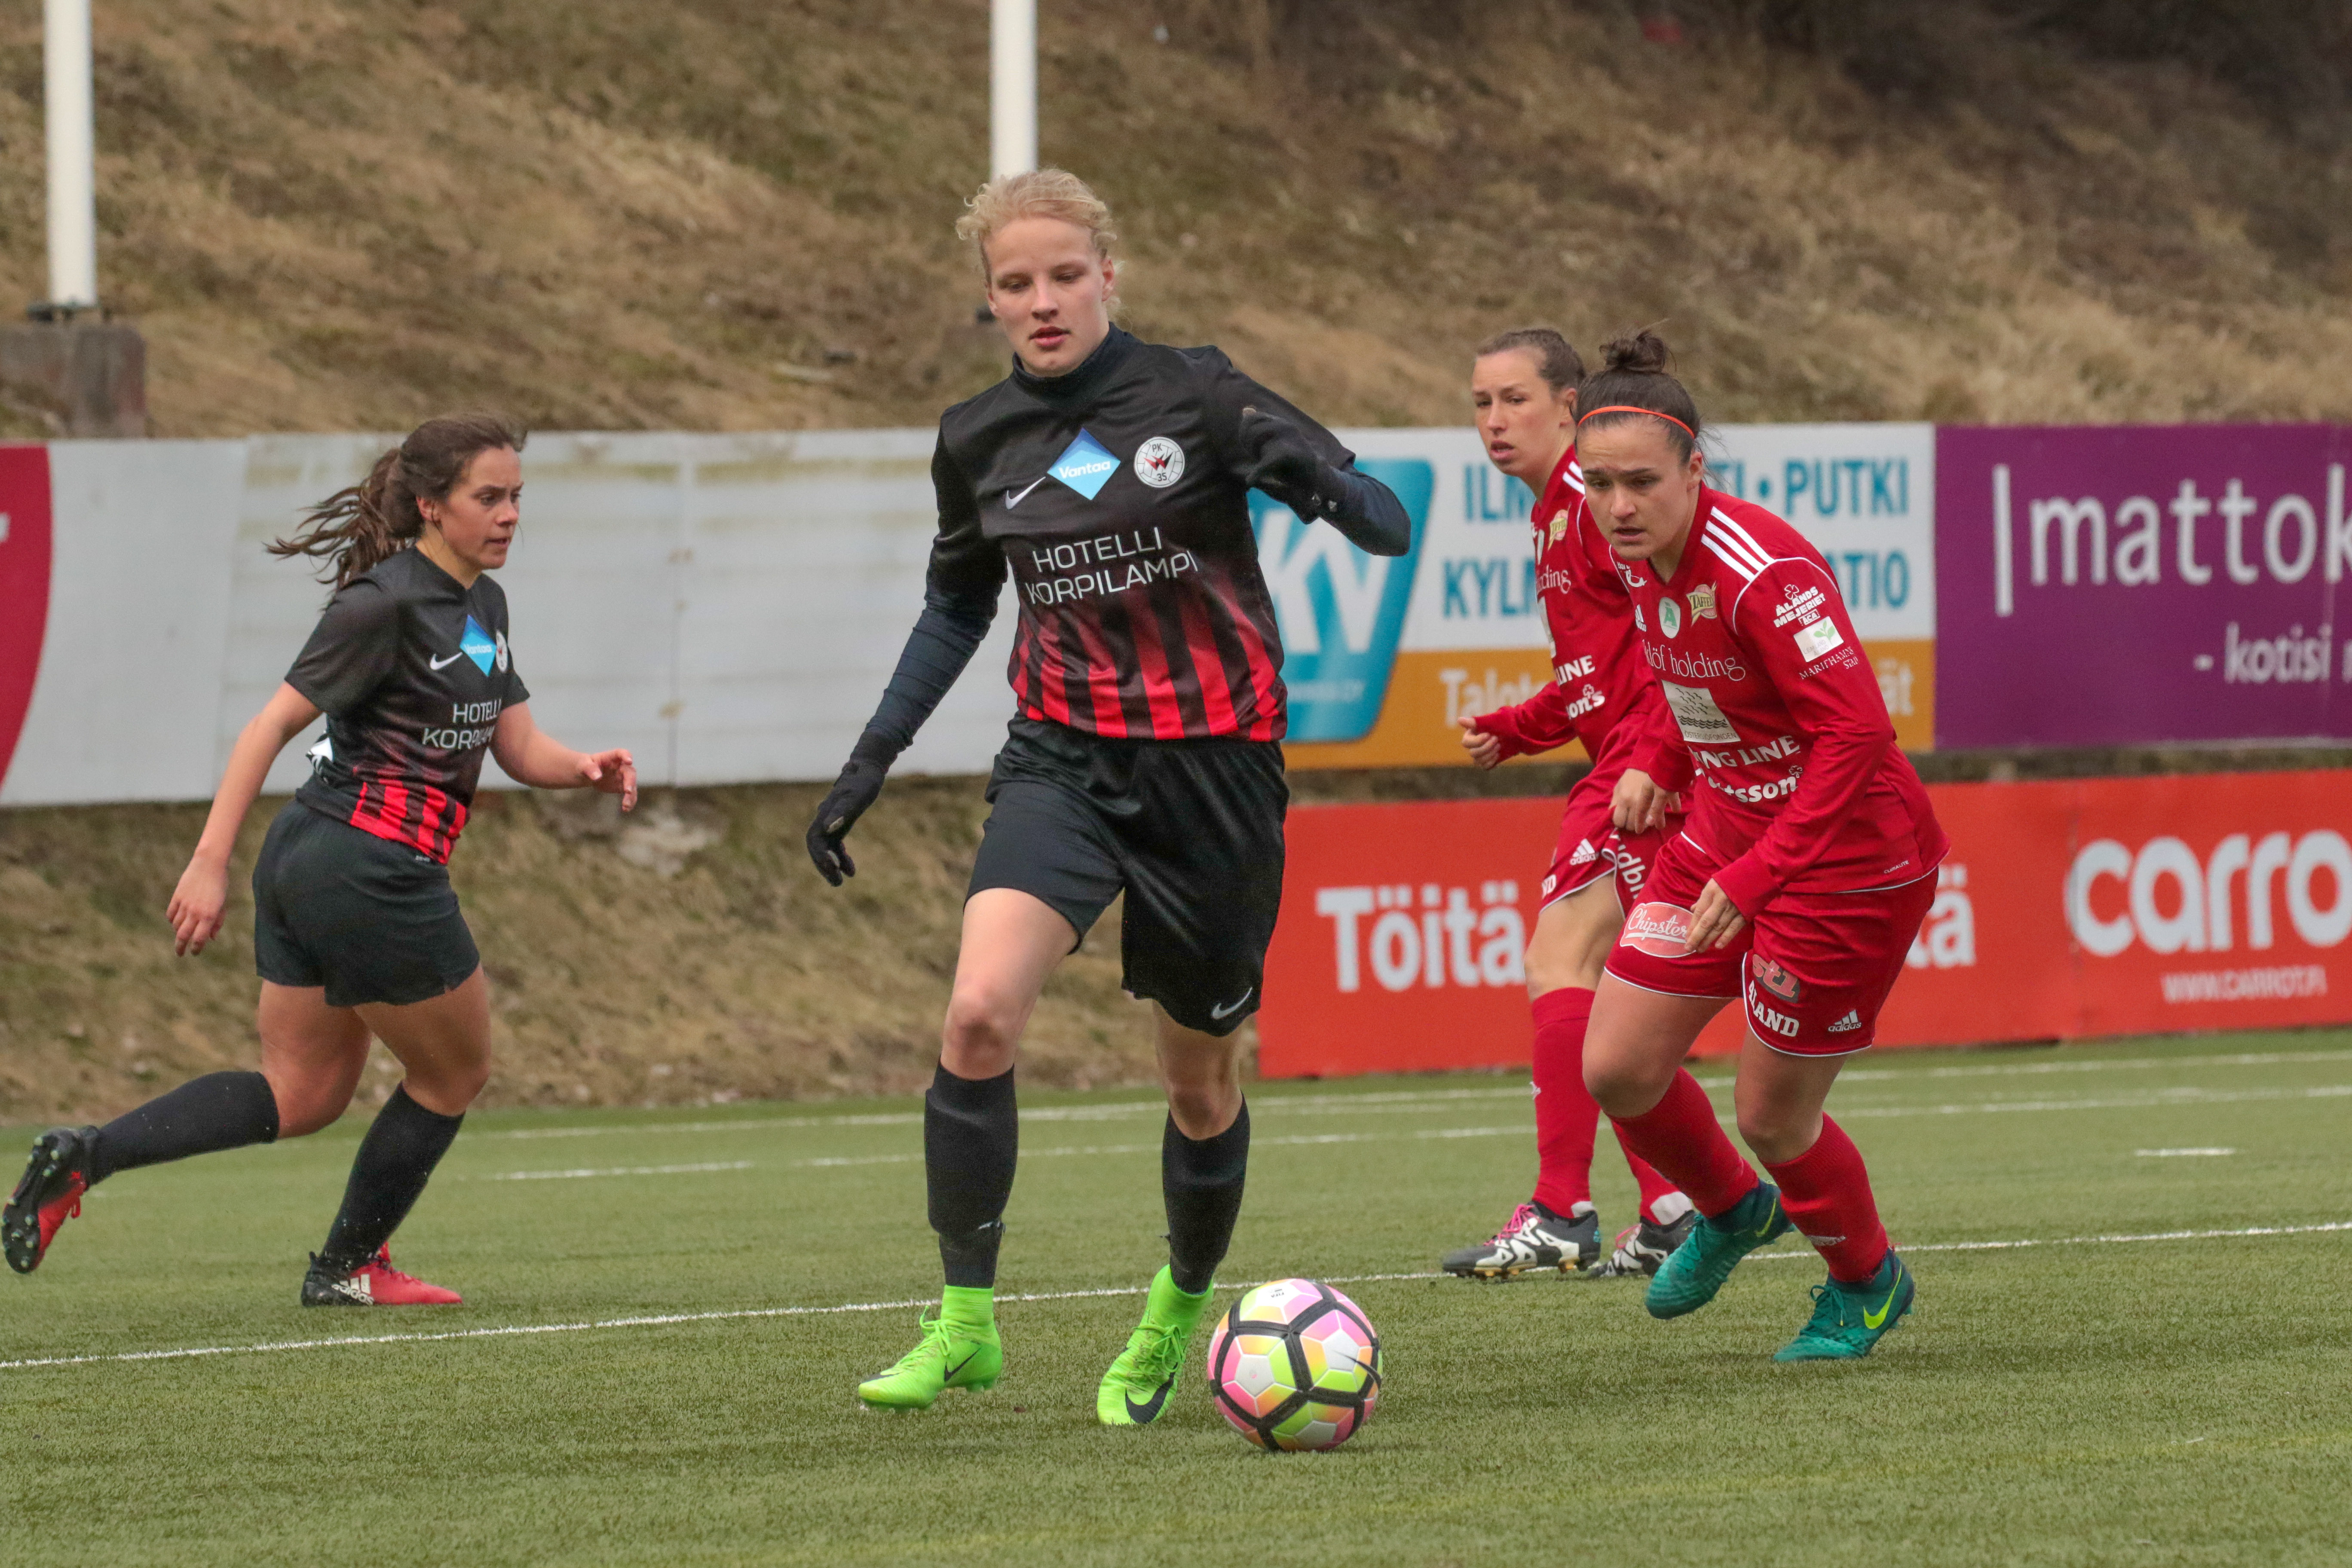 PK 35 Vantaa – Åland United, 1 0, Naisten Liiga, 14.4.2017 42